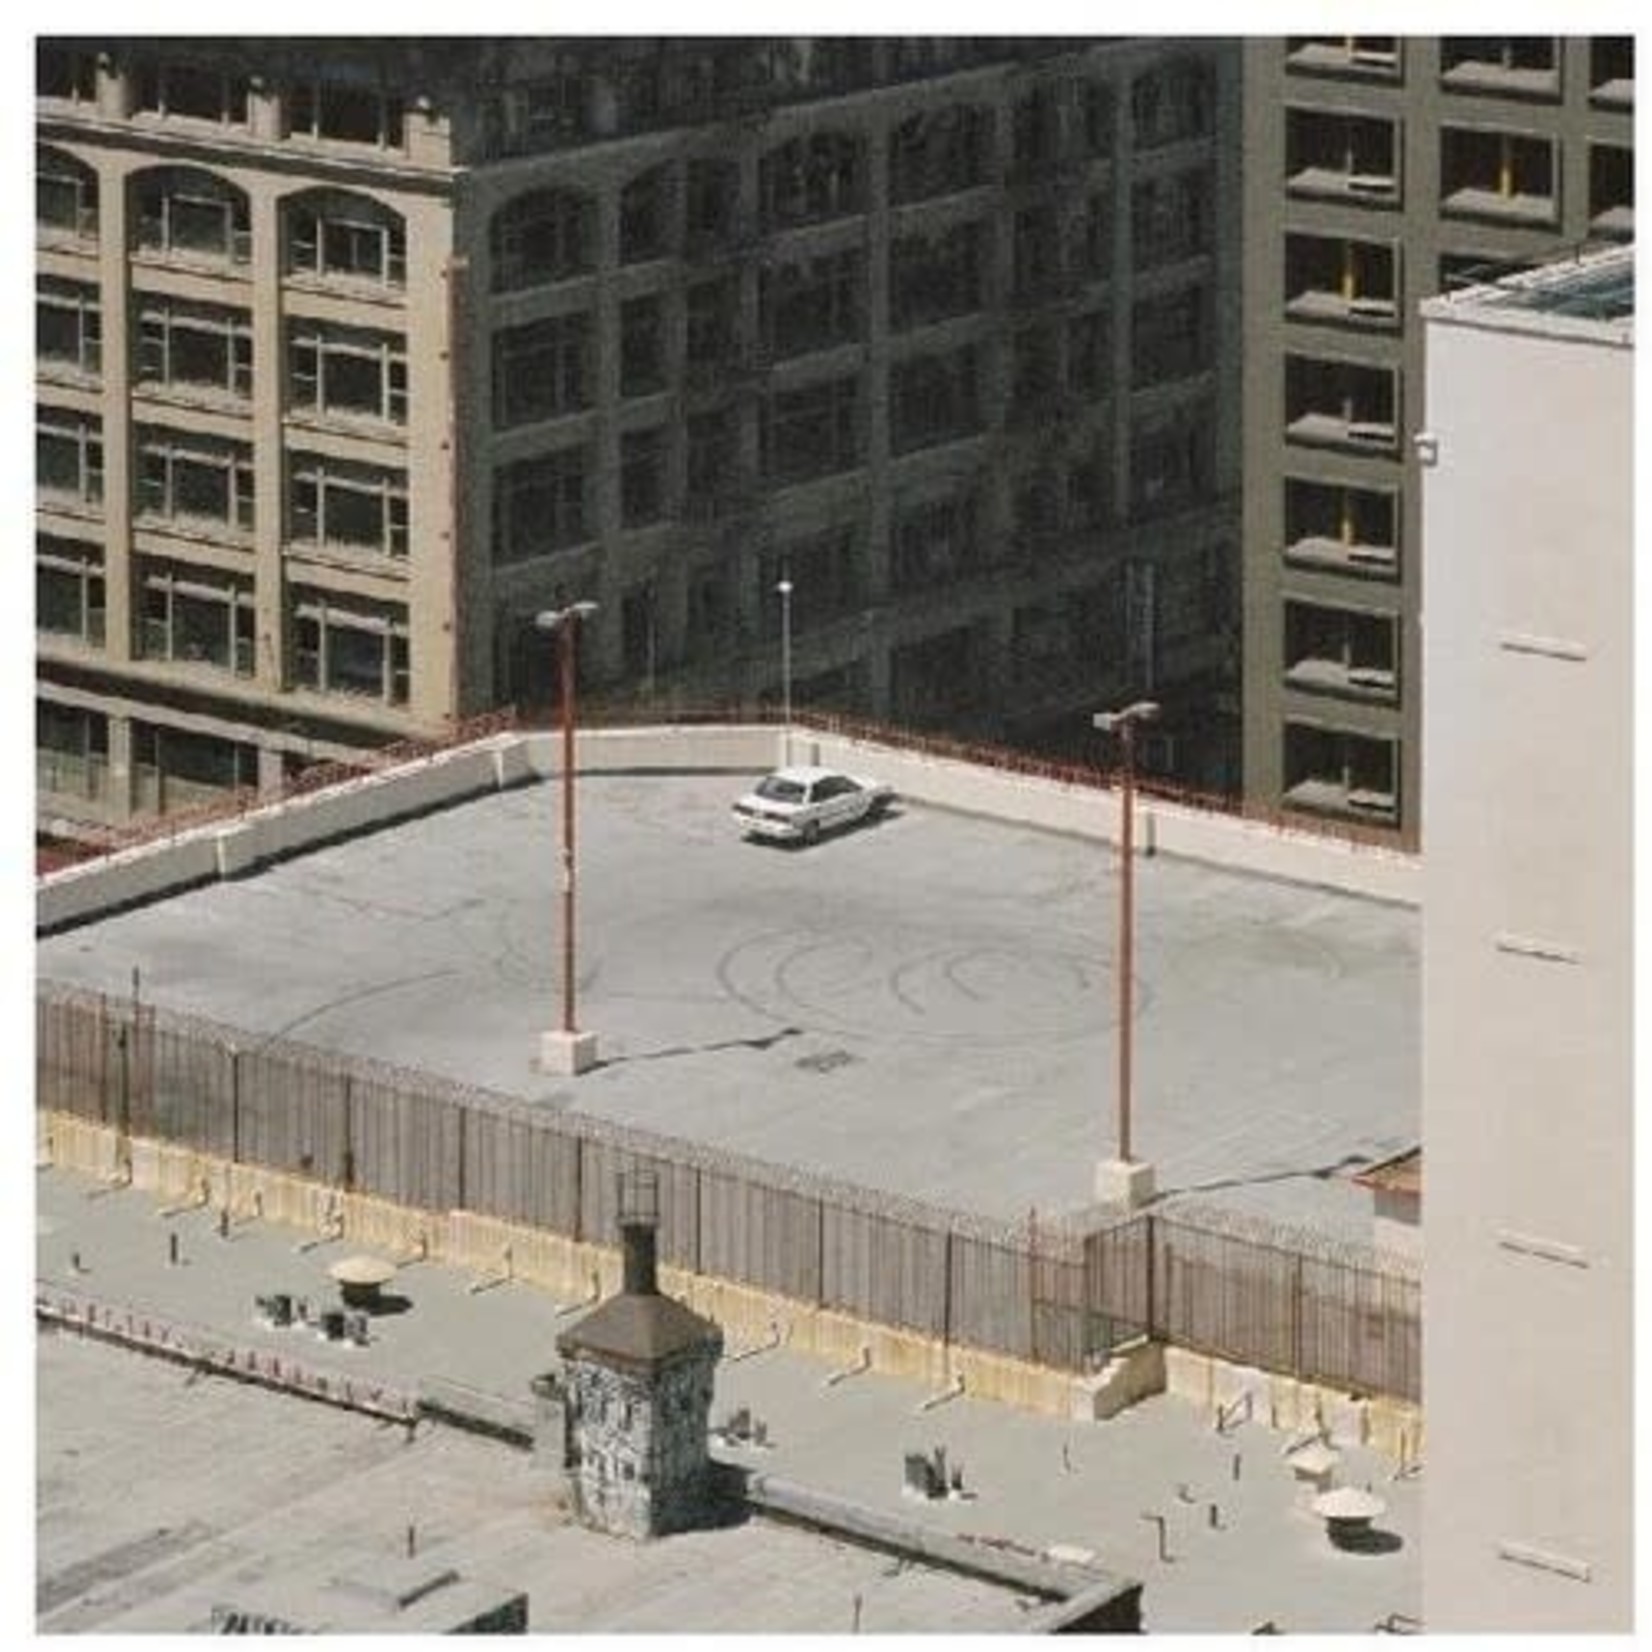 Domino Arctic Monkeys - The Car (LP)